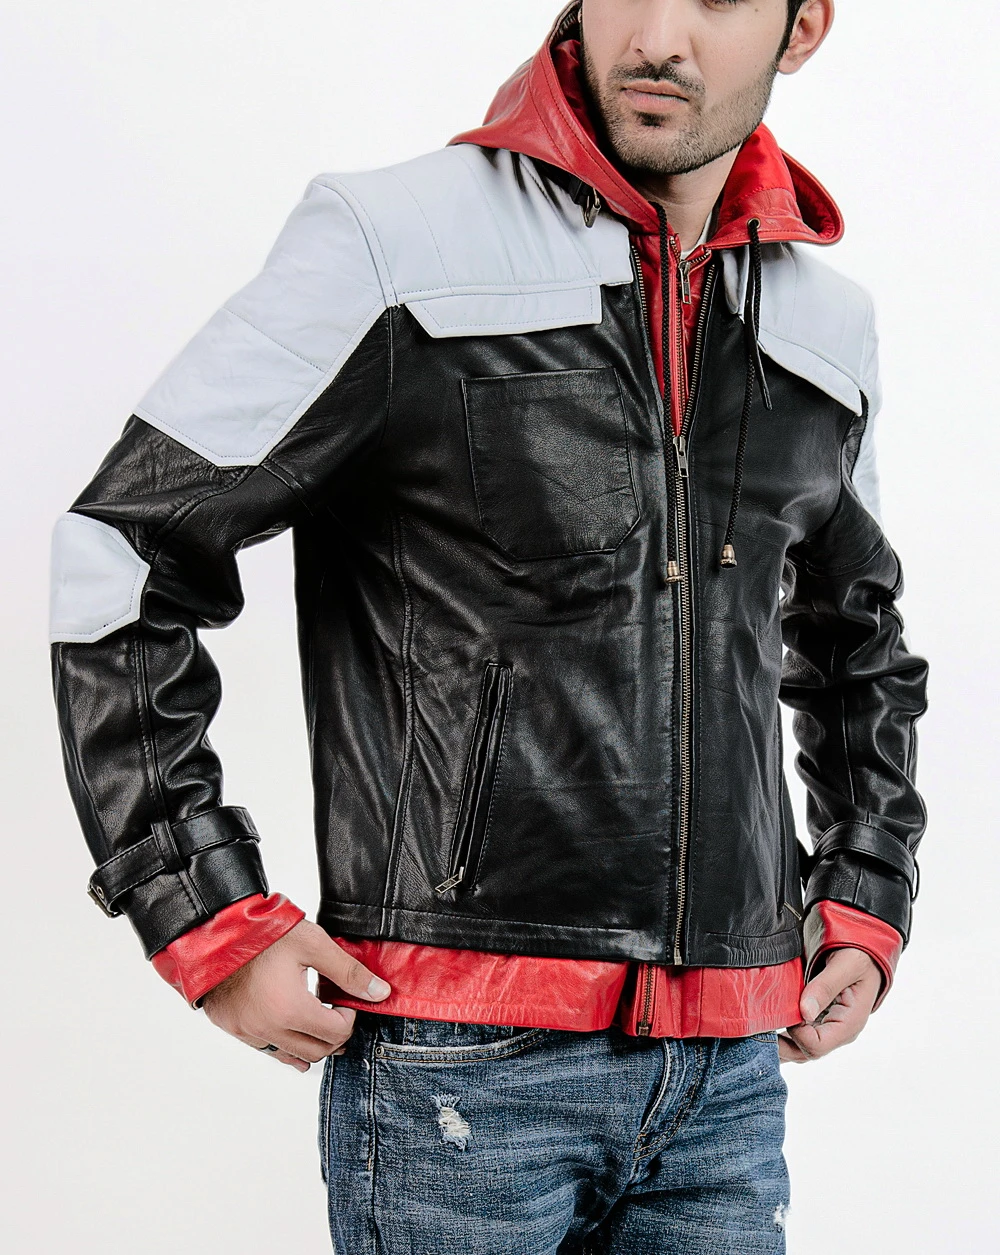 Jason Todd Batman Arkham Knight Red Hood Leather Jacket